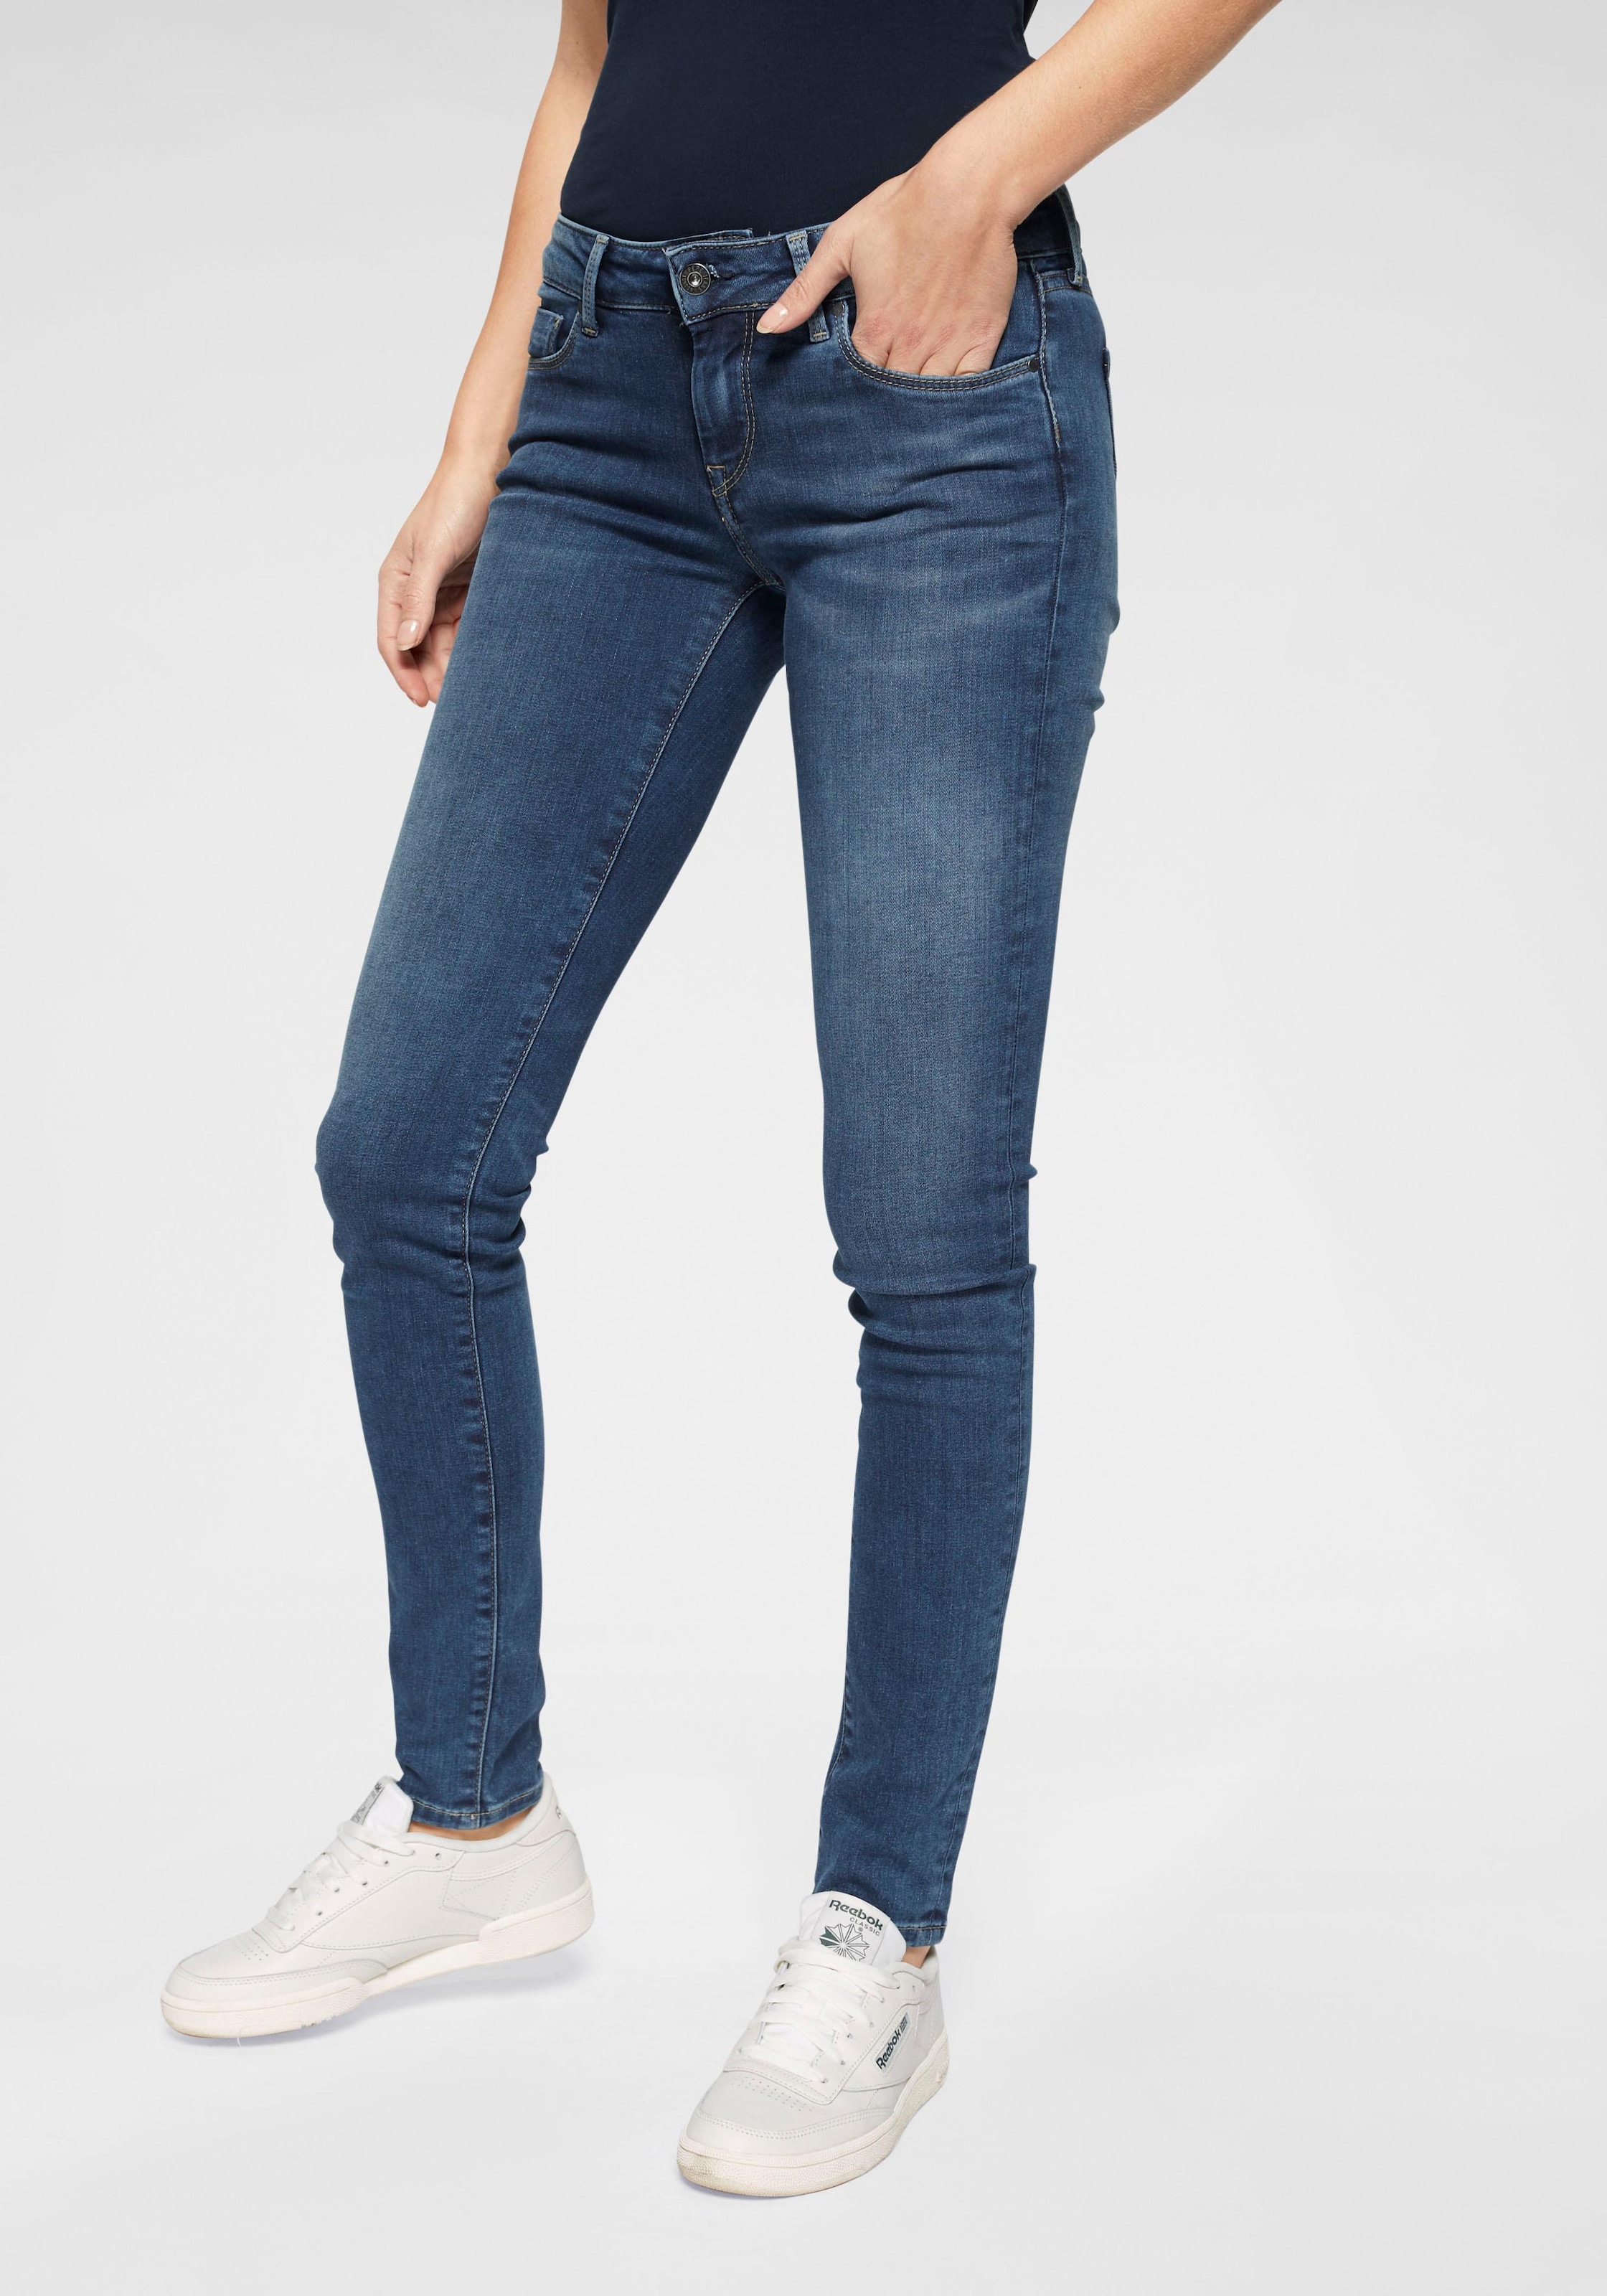 mit Skinny-fit-Jeans Jeans walking Bund Stretch-Anteil »SOHO«, 5-Pocket-Stil shoppen I\'m 1-Knopf und Pepe im |